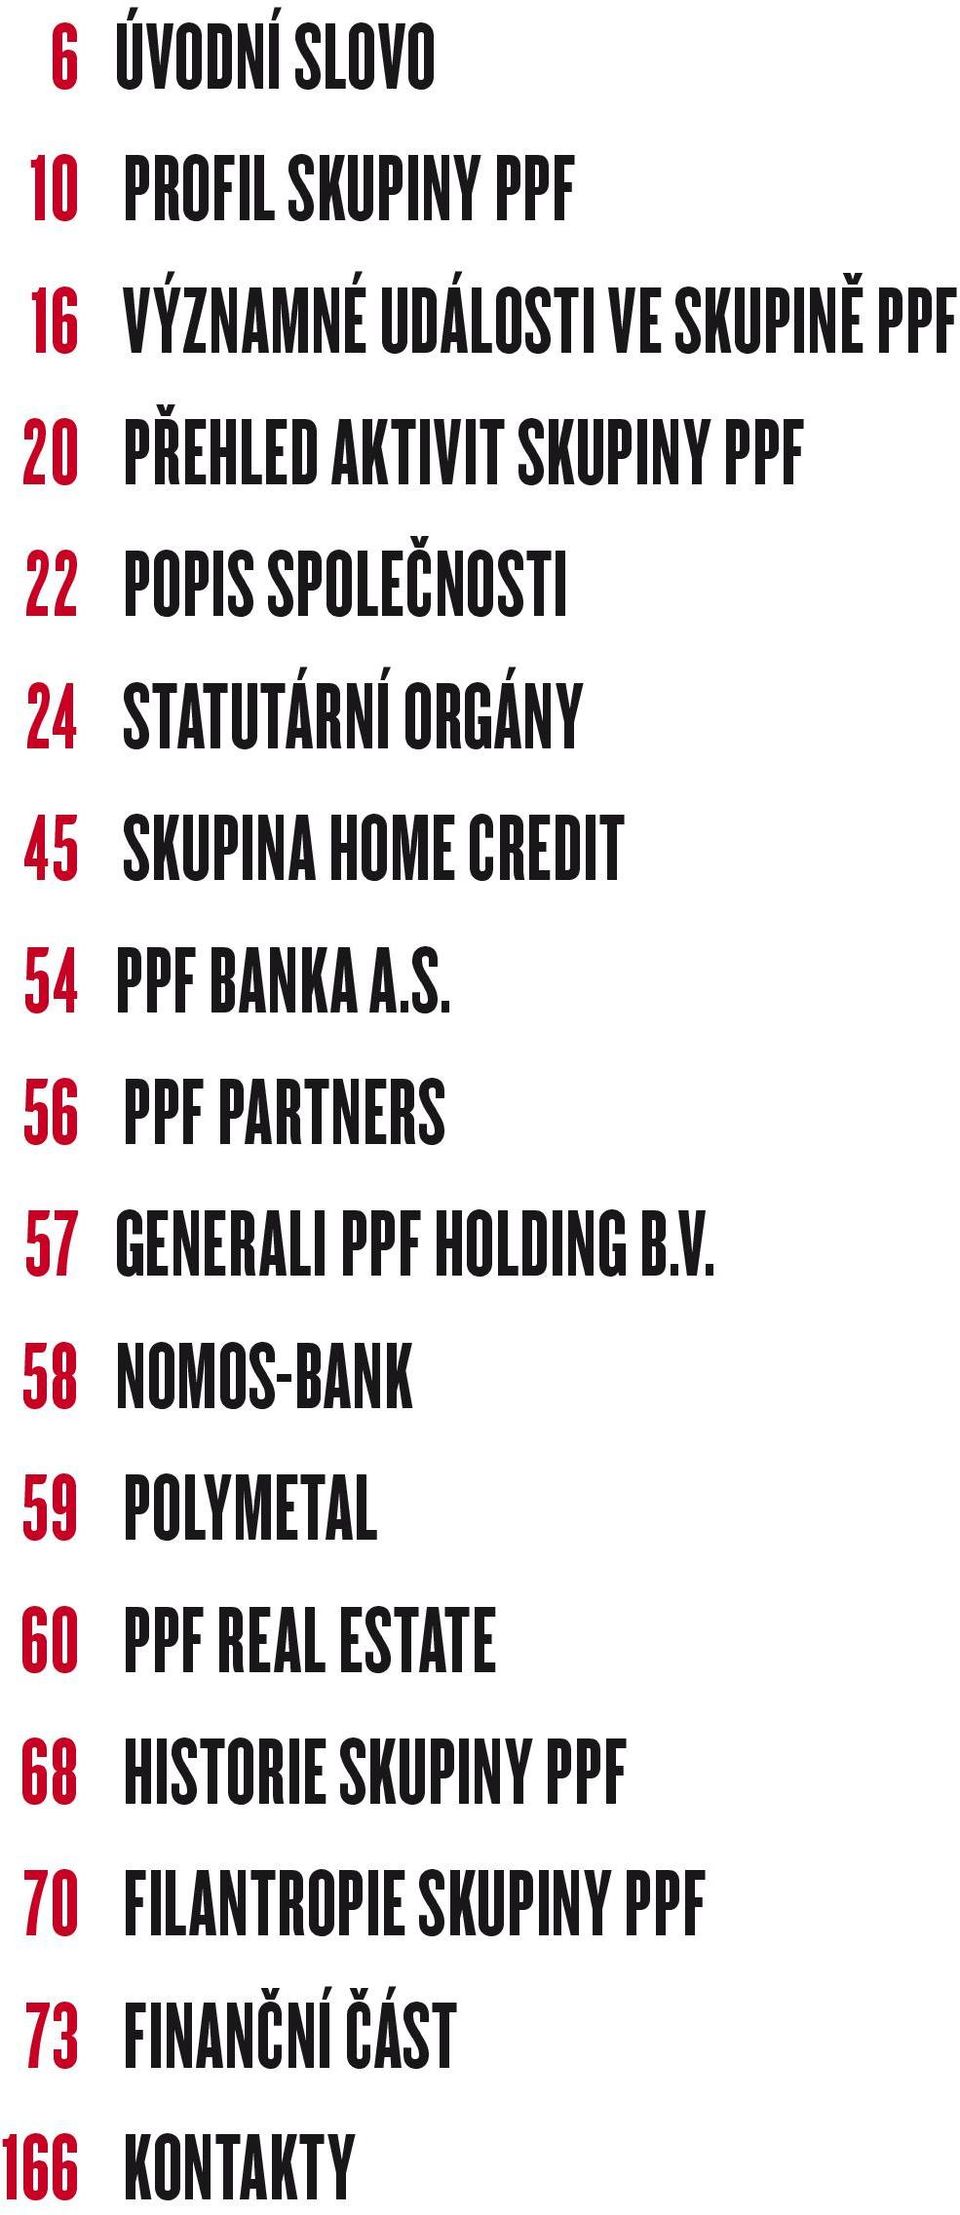 ppf banka a.s. 56 ppf Partners 57 generali PPF Holding B.V.